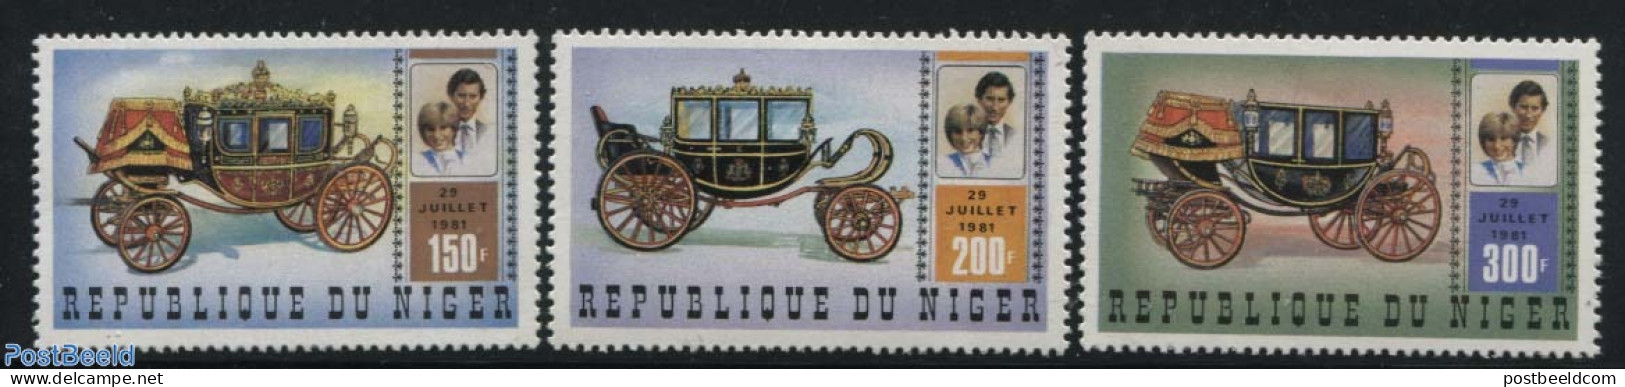 Niger 1981 Charles & Diana Wedding 3v, Mint NH, History - Transport - Charles & Diana - Kings & Queens (Royalty) - Coa.. - Königshäuser, Adel